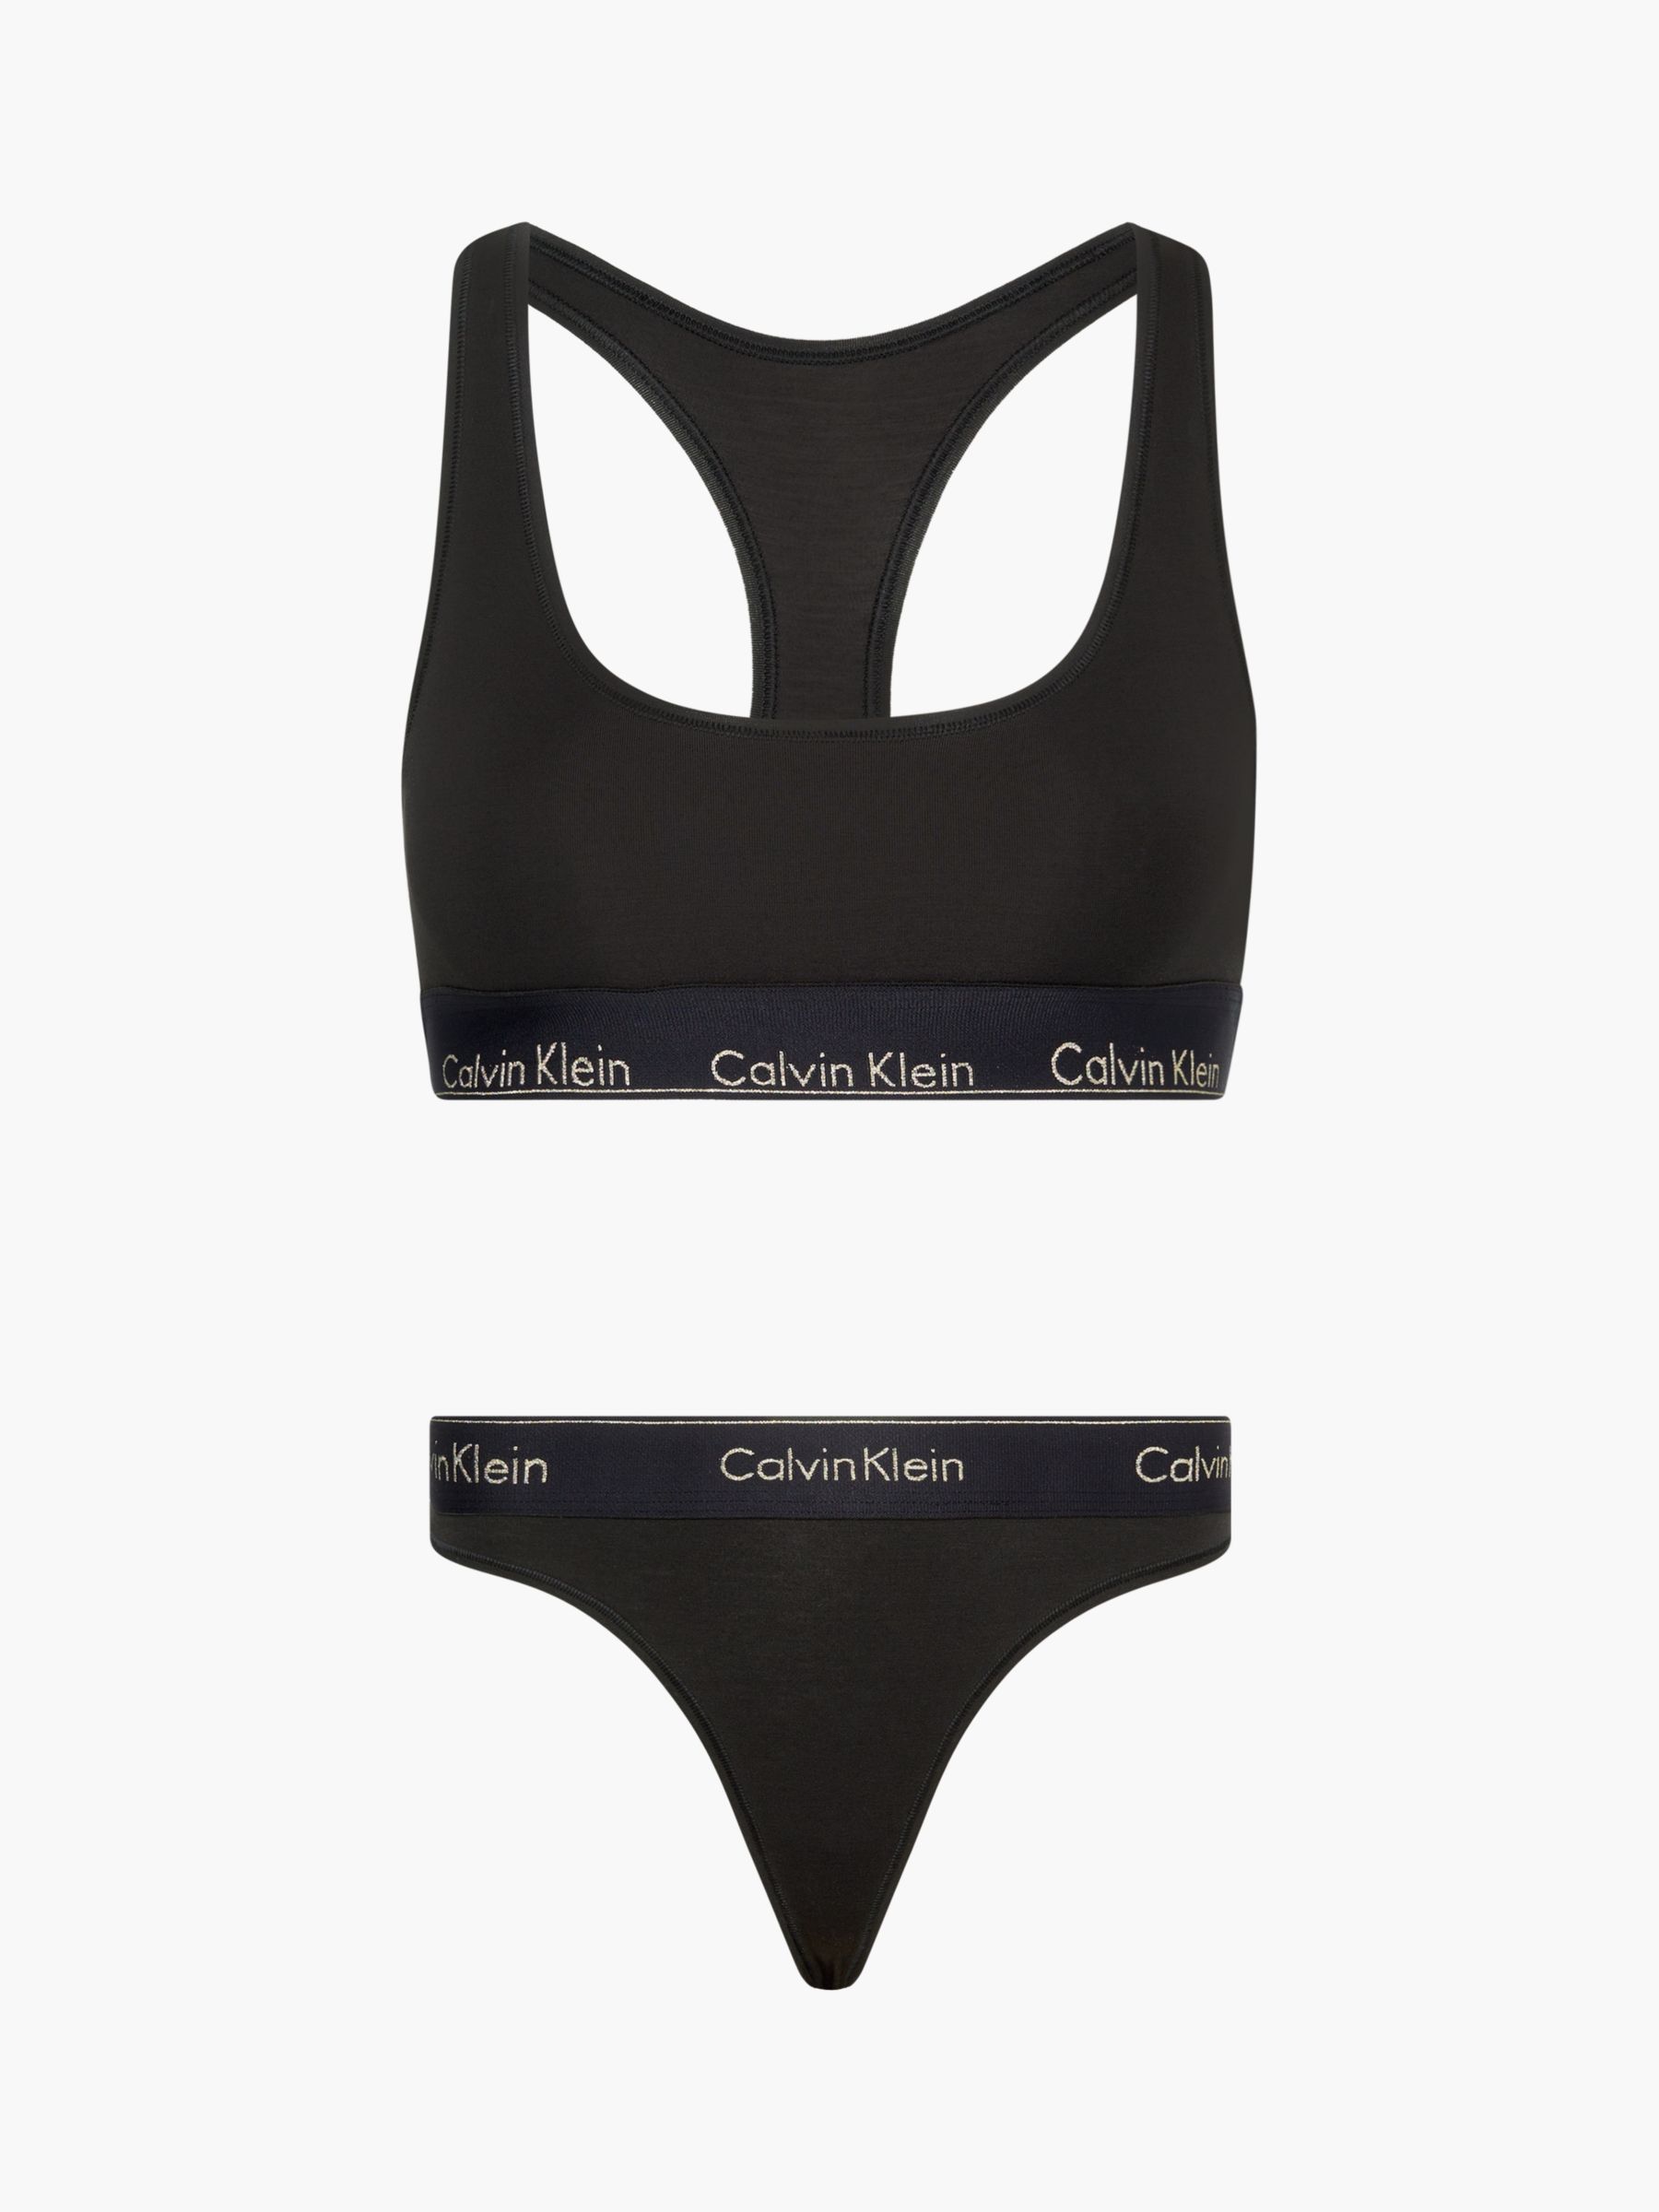 30 Underwear & Loungewear Gifts From Calvin Klein At John Lewis